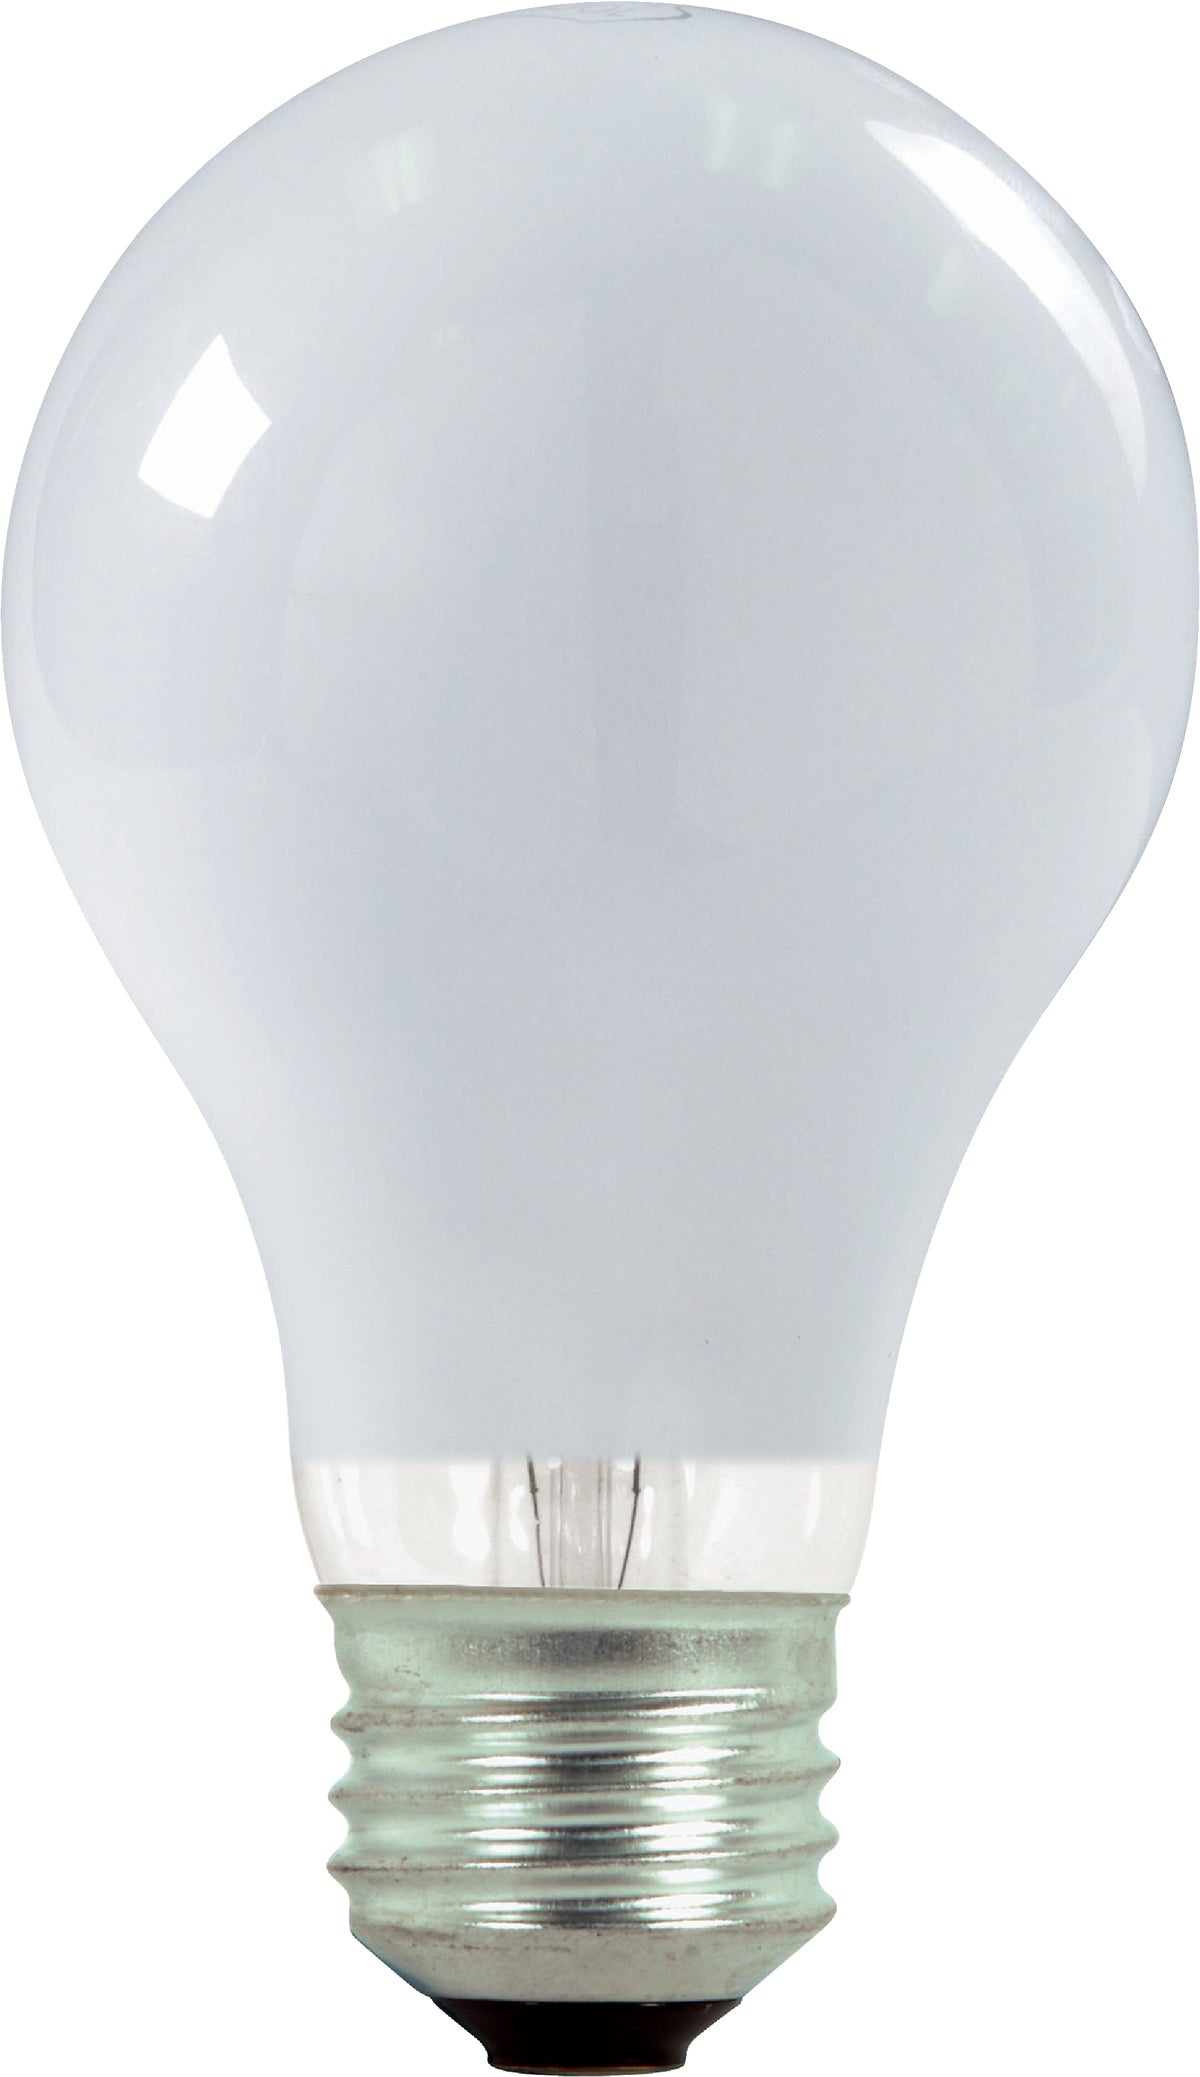 Philips B11 Blunt Tip Candelabra Halogen Decorative Light Bulb 